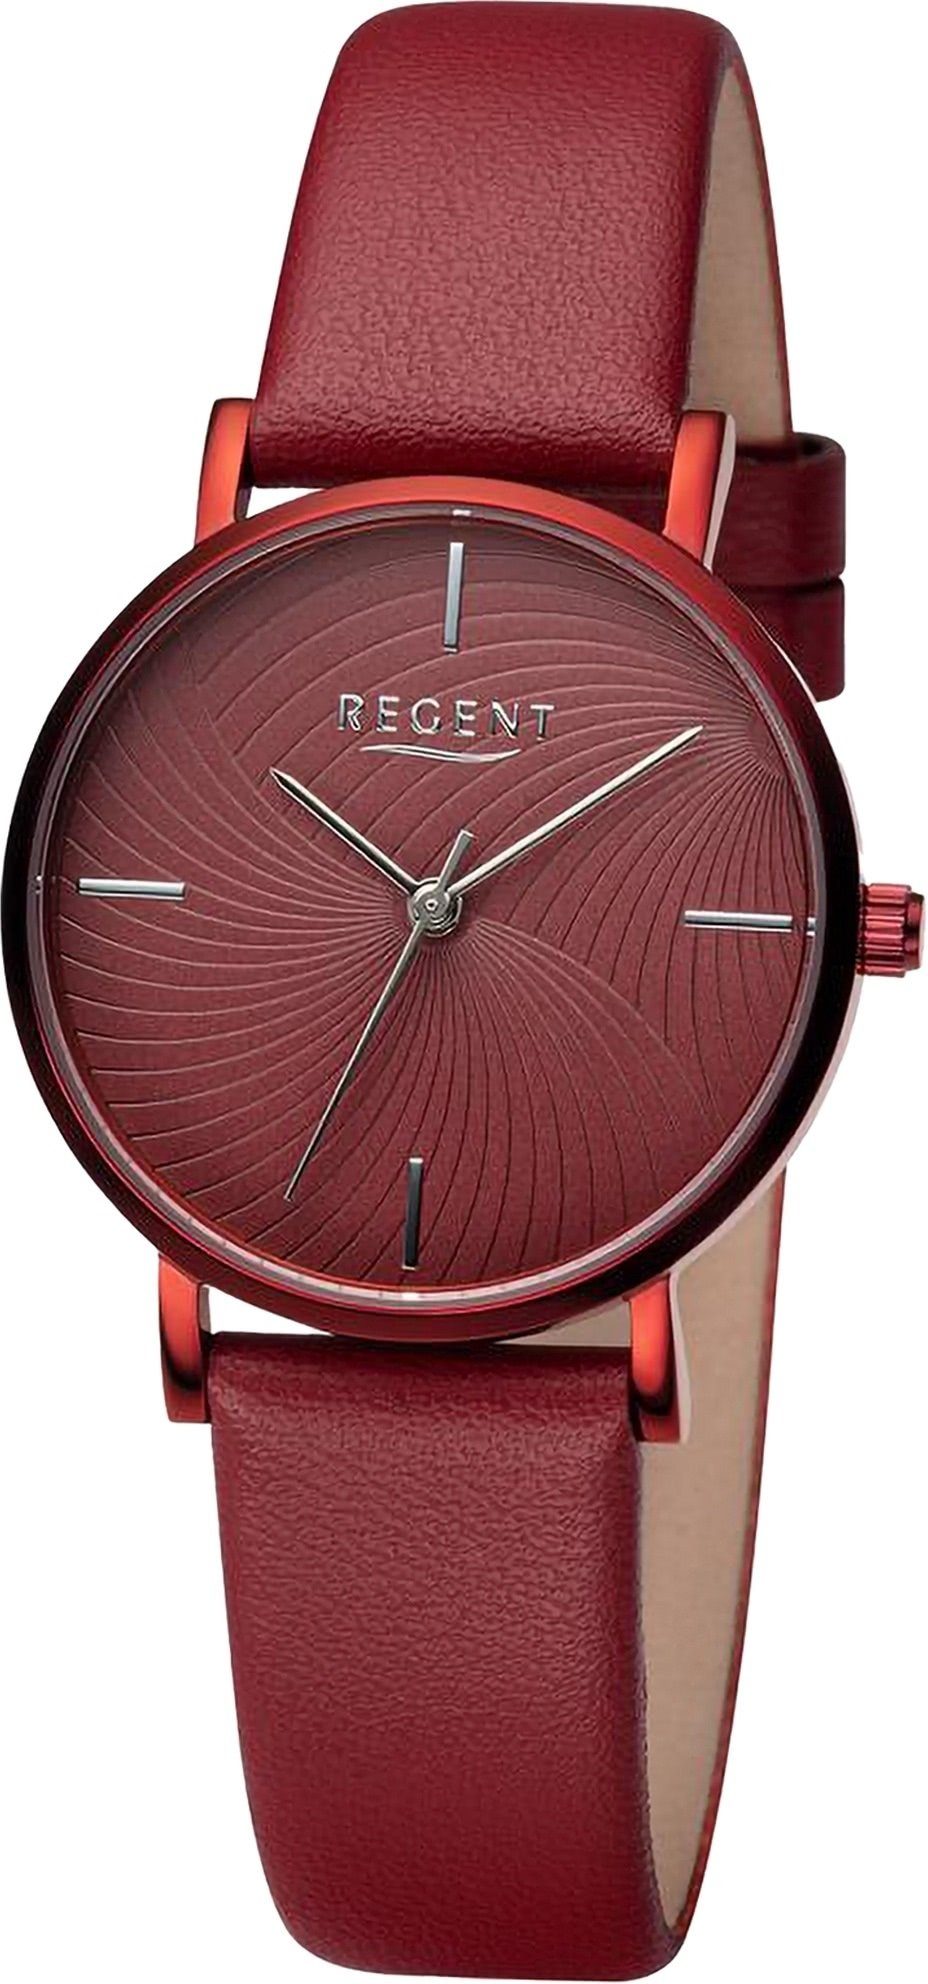 Regent Quarzuhr Regent Armbanduhr groß Damen Analog, extra Damen 32mm), (ca. Armbanduhr rund, Lederarmband